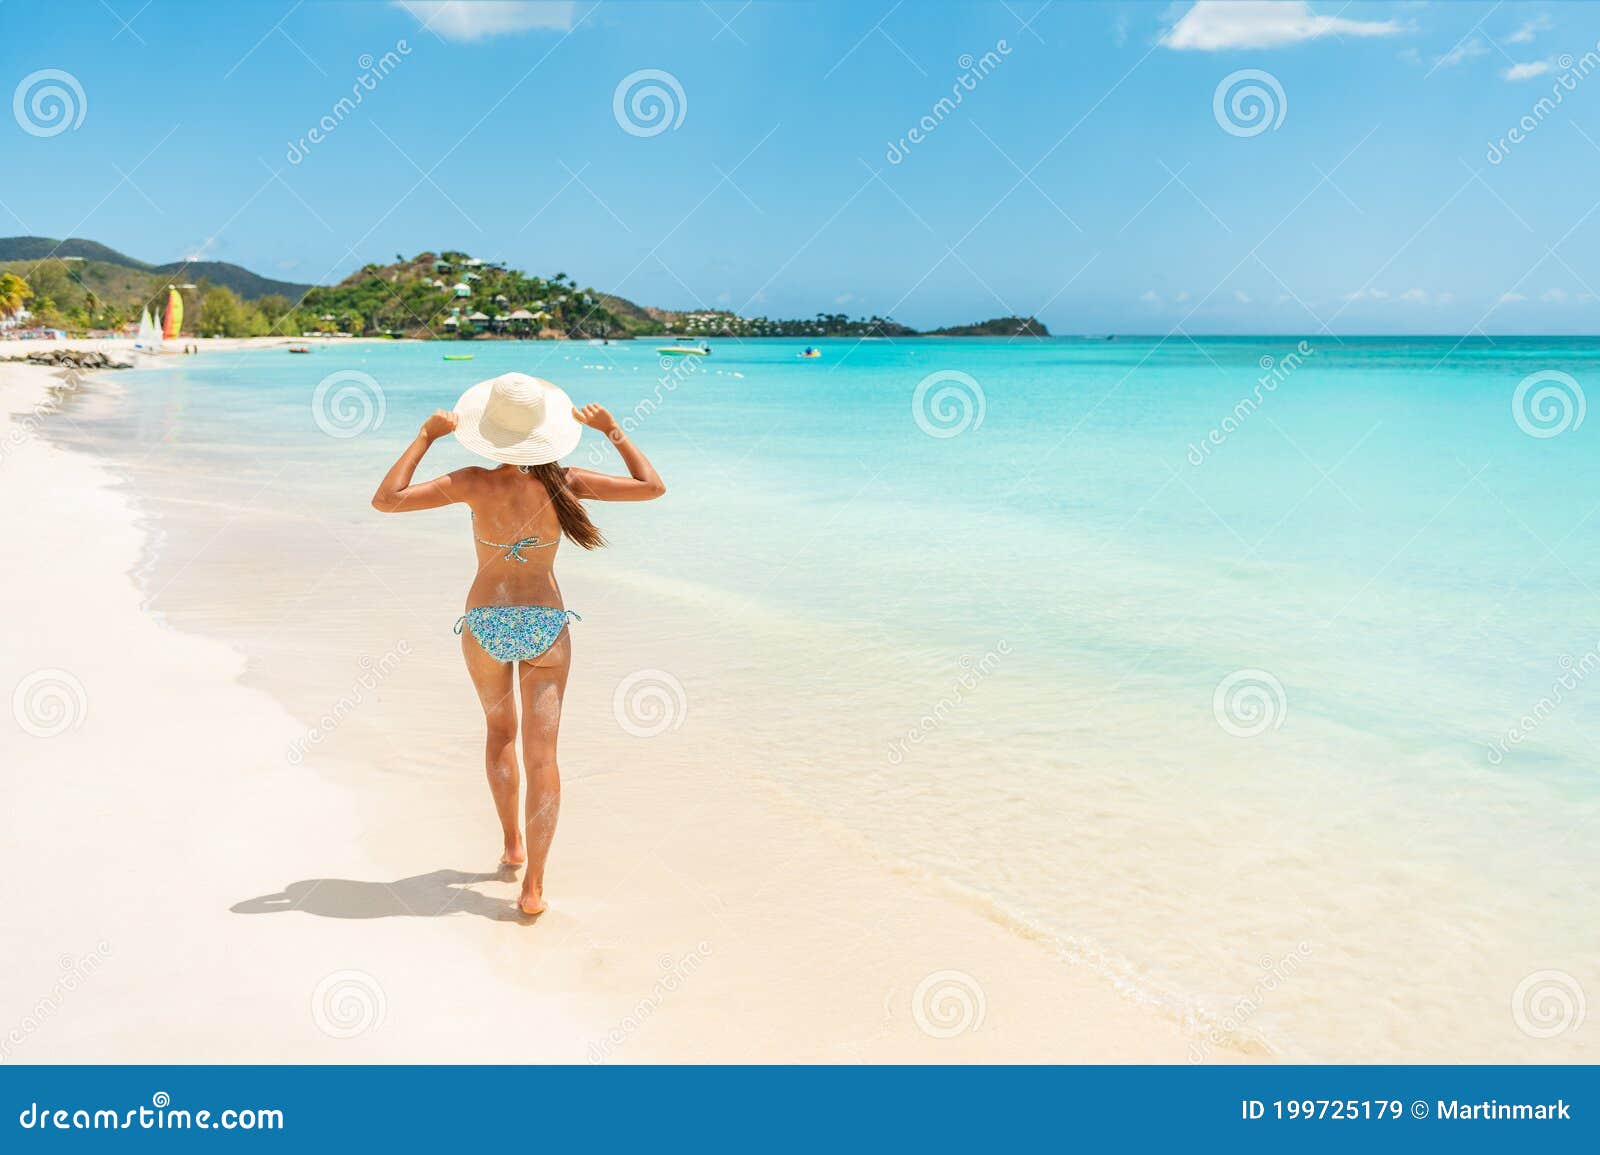 Beach Travel Vacation Woman Walking On Luxury Caribbean Cruise Destination Antigua Island In